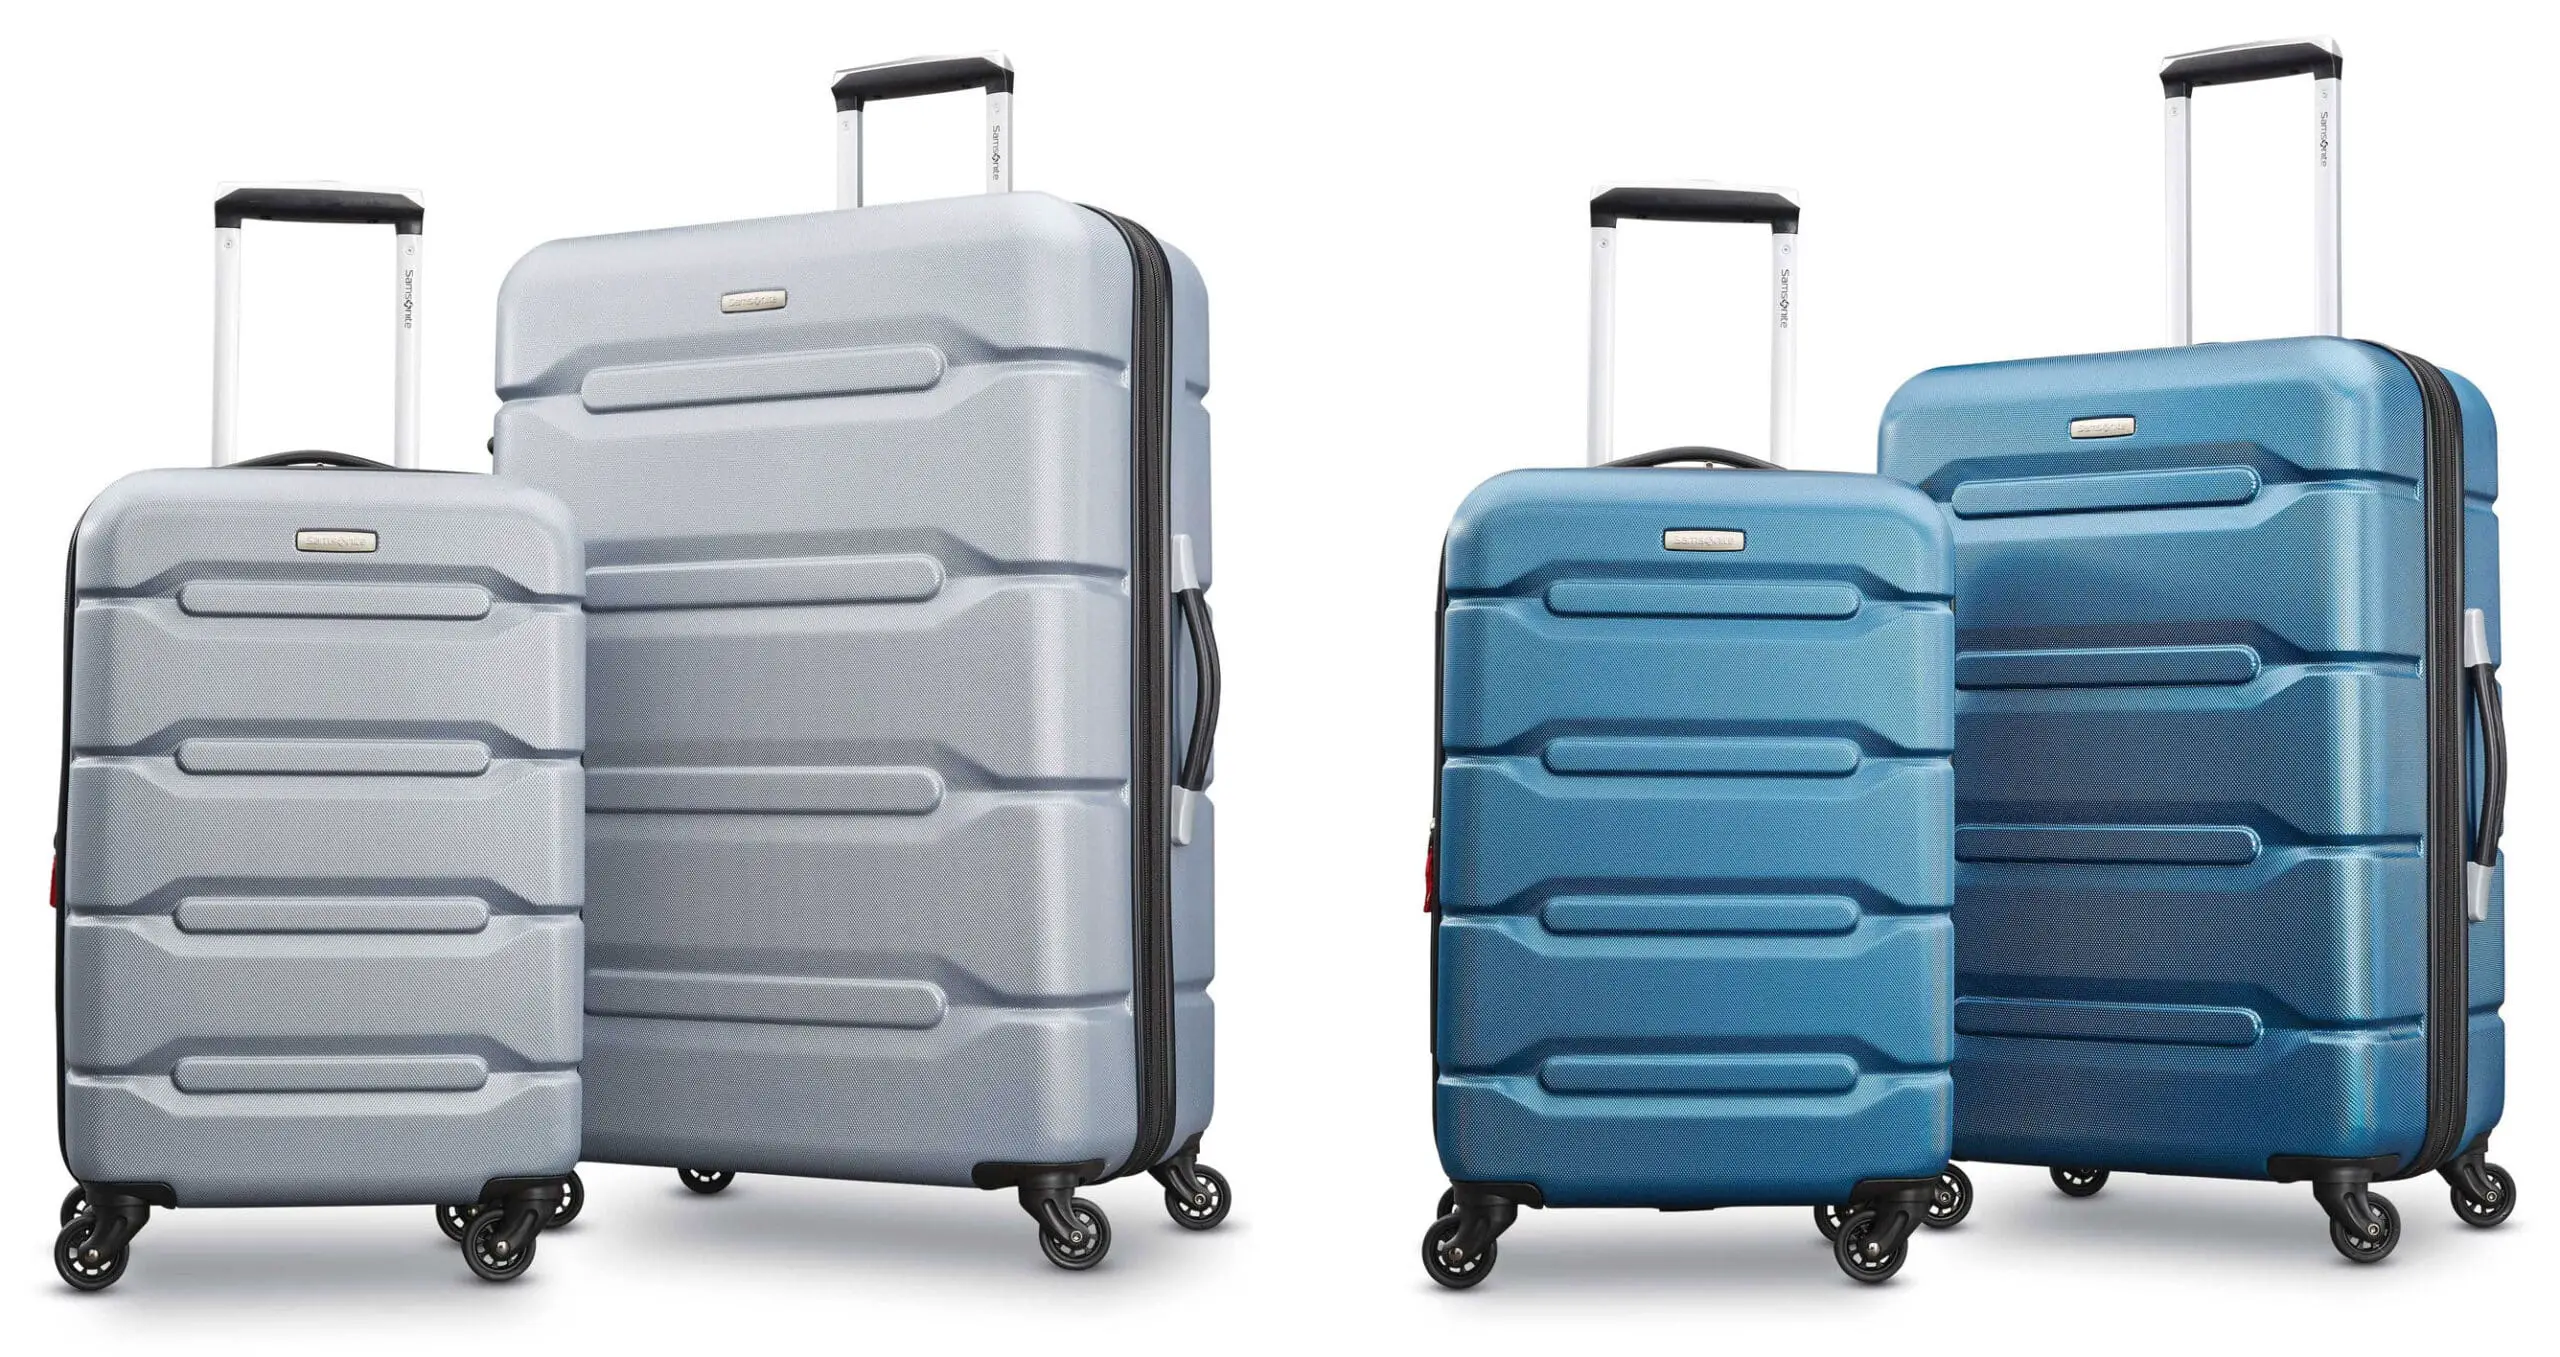 Where is Samsonite Luggage Manufactured?